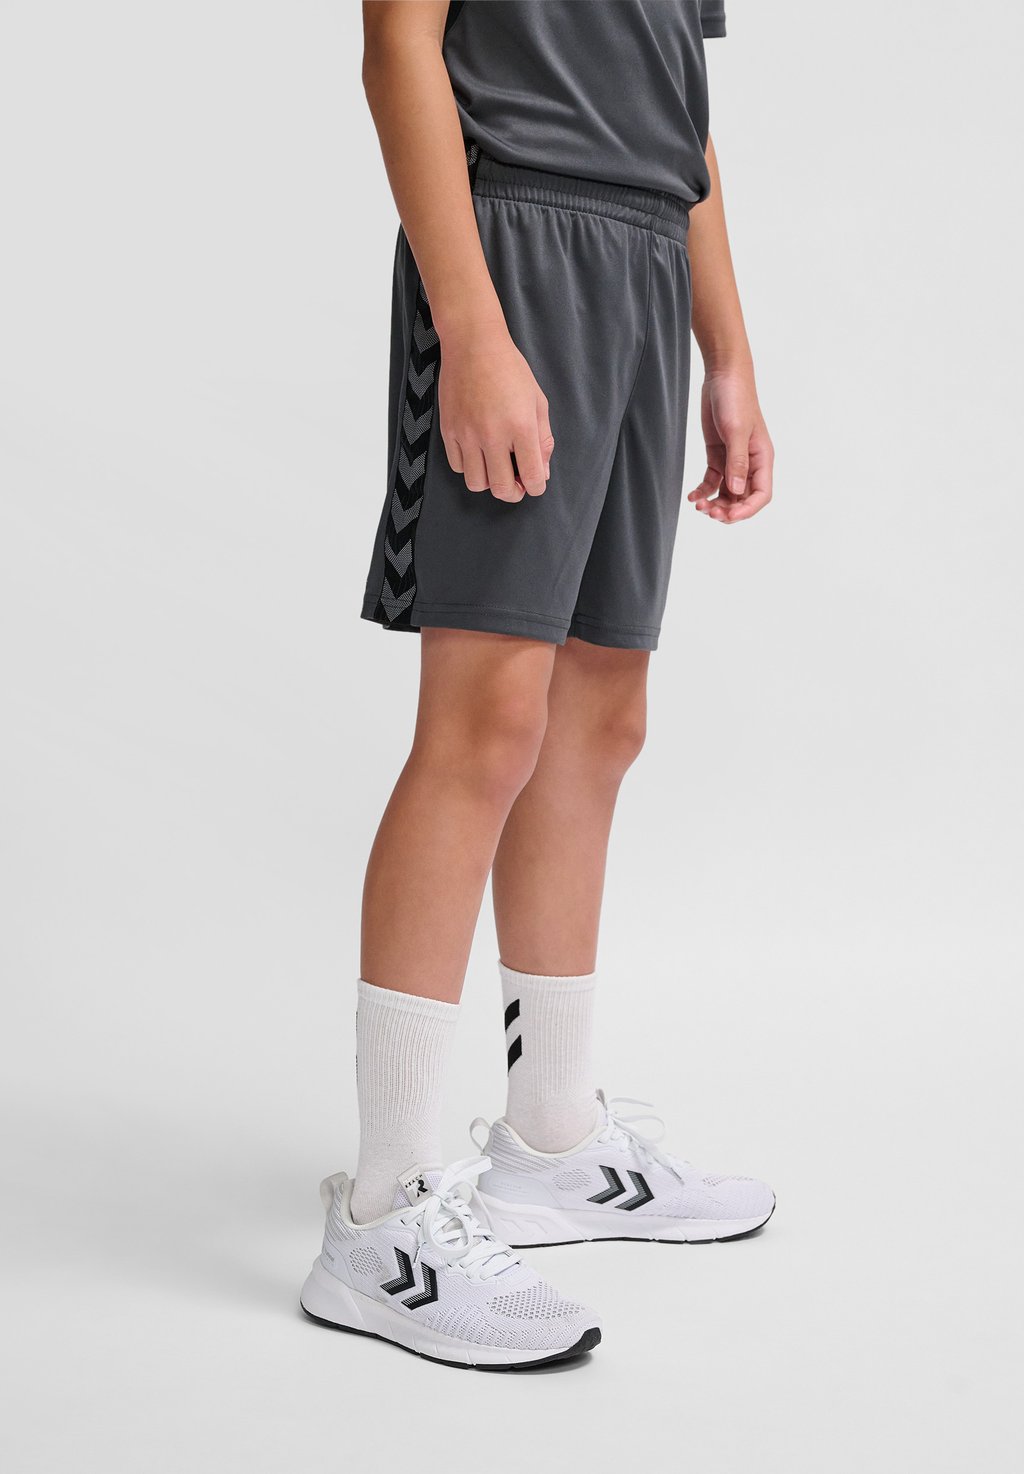 Короткие спортивные брюки AUTHENTIC Hummel, цвет asphalt спортивные брюки authentic hummel цвет black white